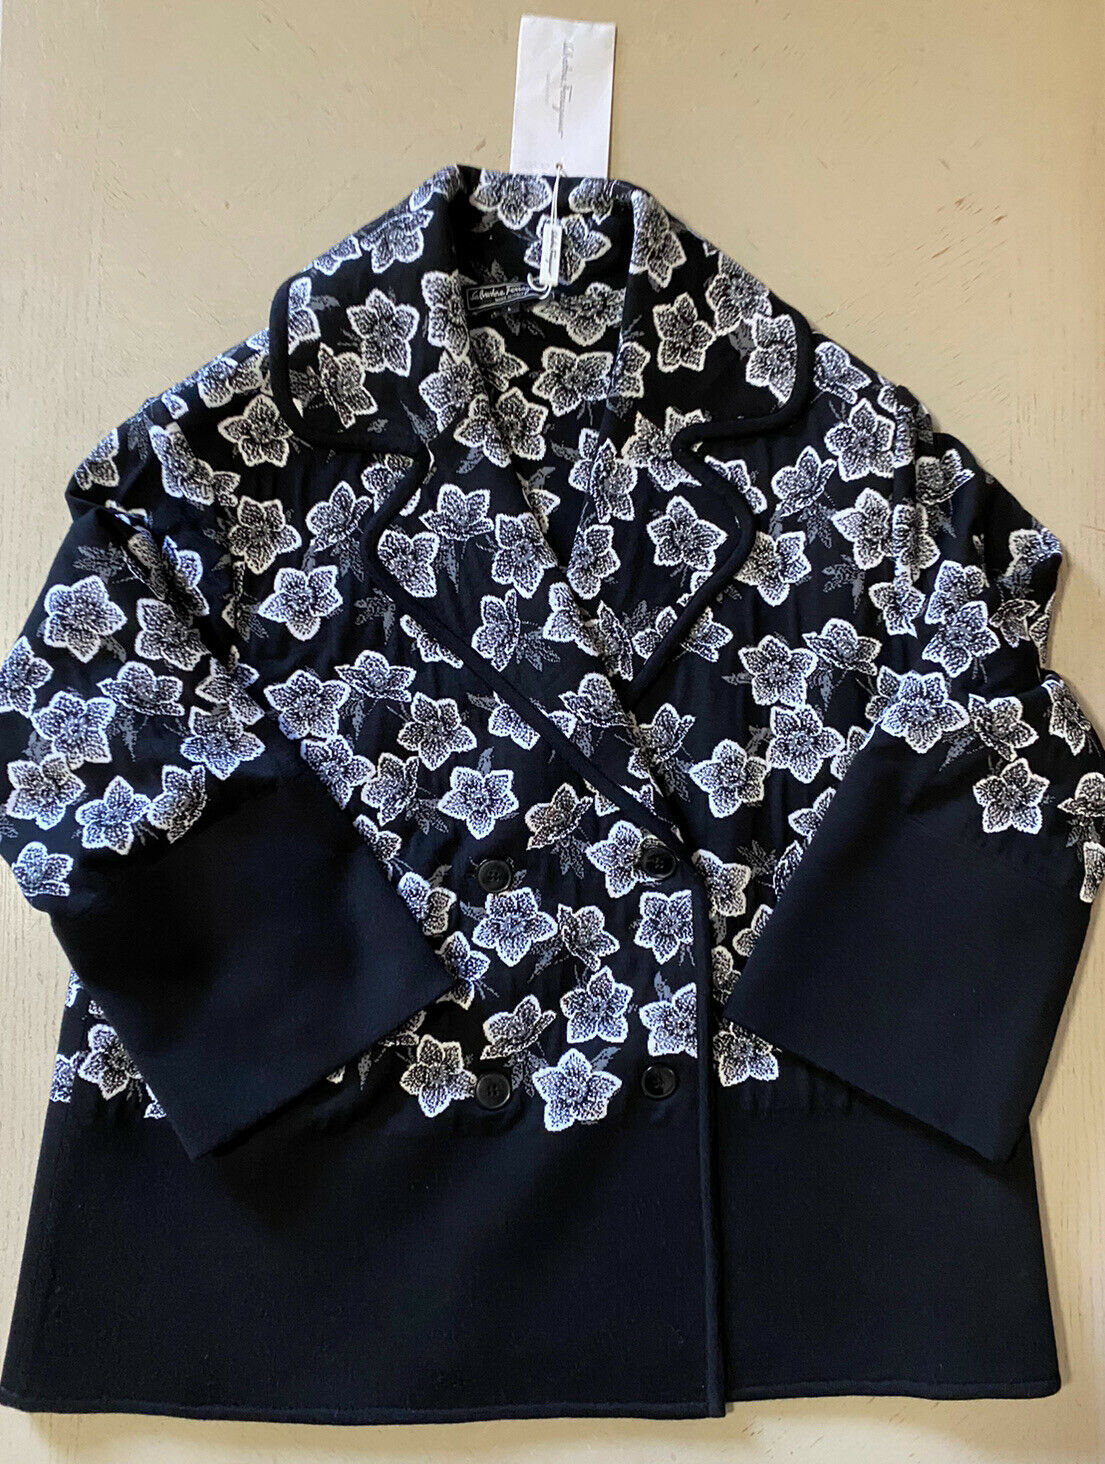 New $1790 Women’s Jacket Blazer Black/White Size L  Made in Italy